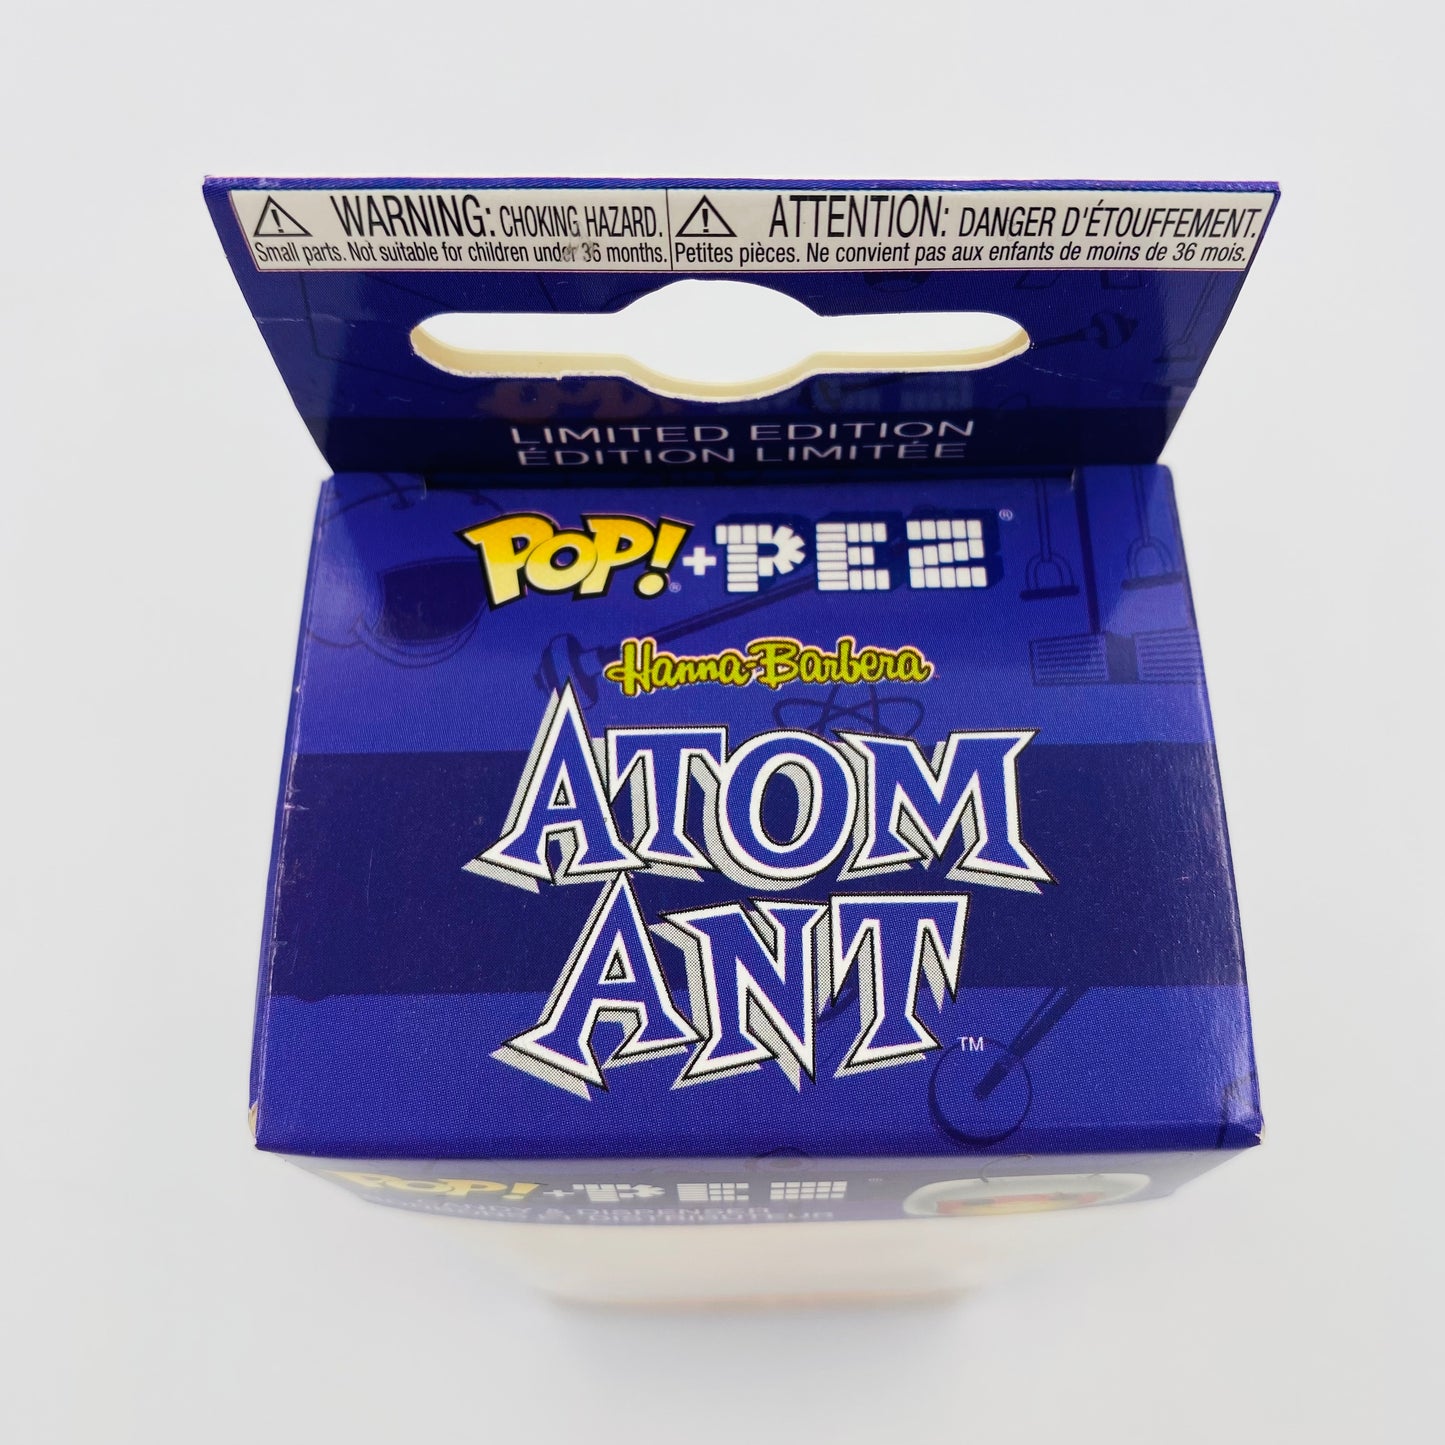 Hanna-Barbera Atom Ant Pop! + PEZ dispenser (2019) boxed